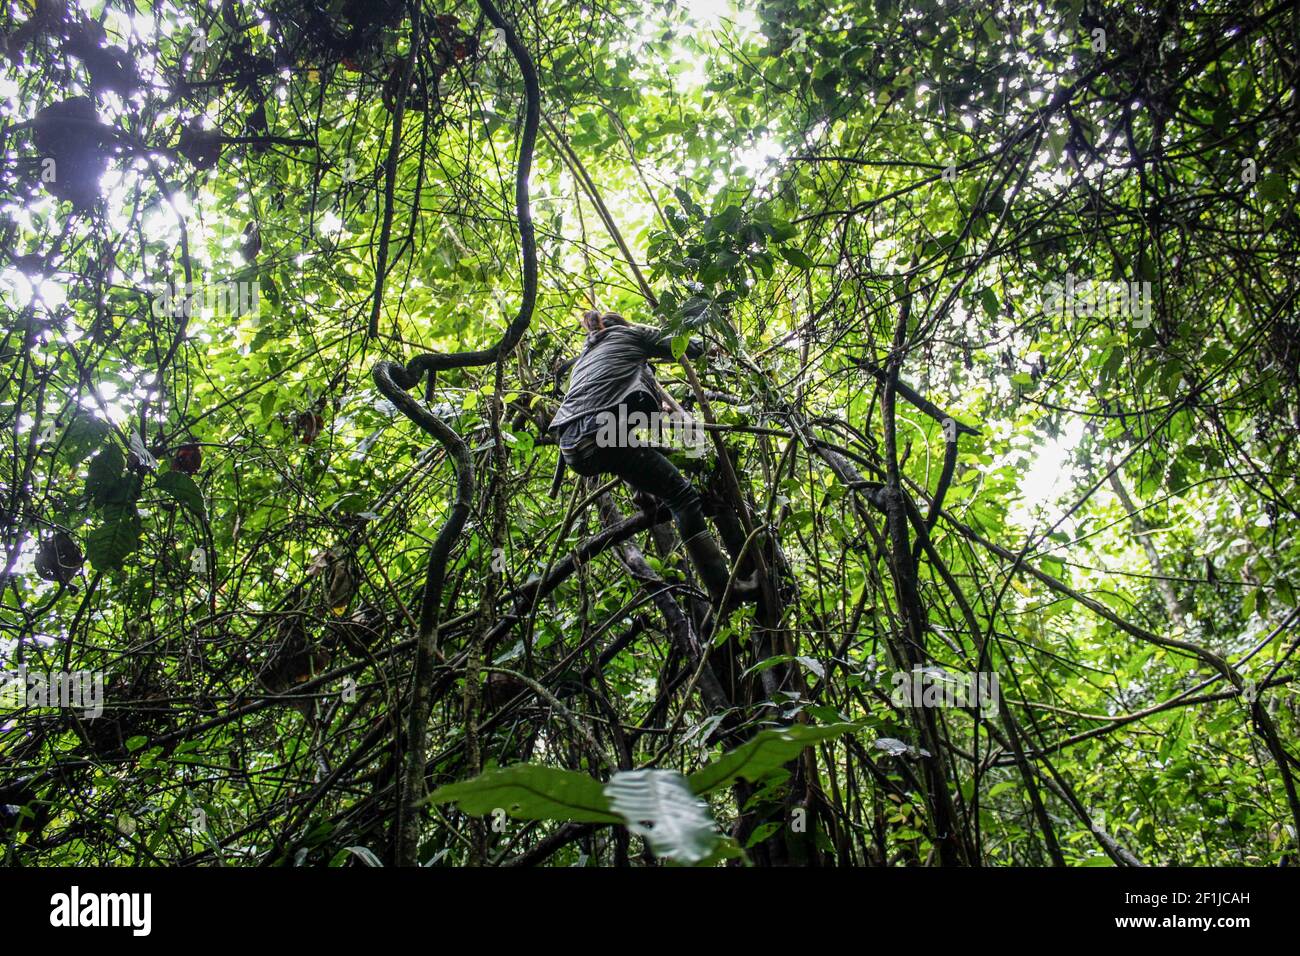 Dedi Langlangbuana climbs on a tree to check on bird song caught